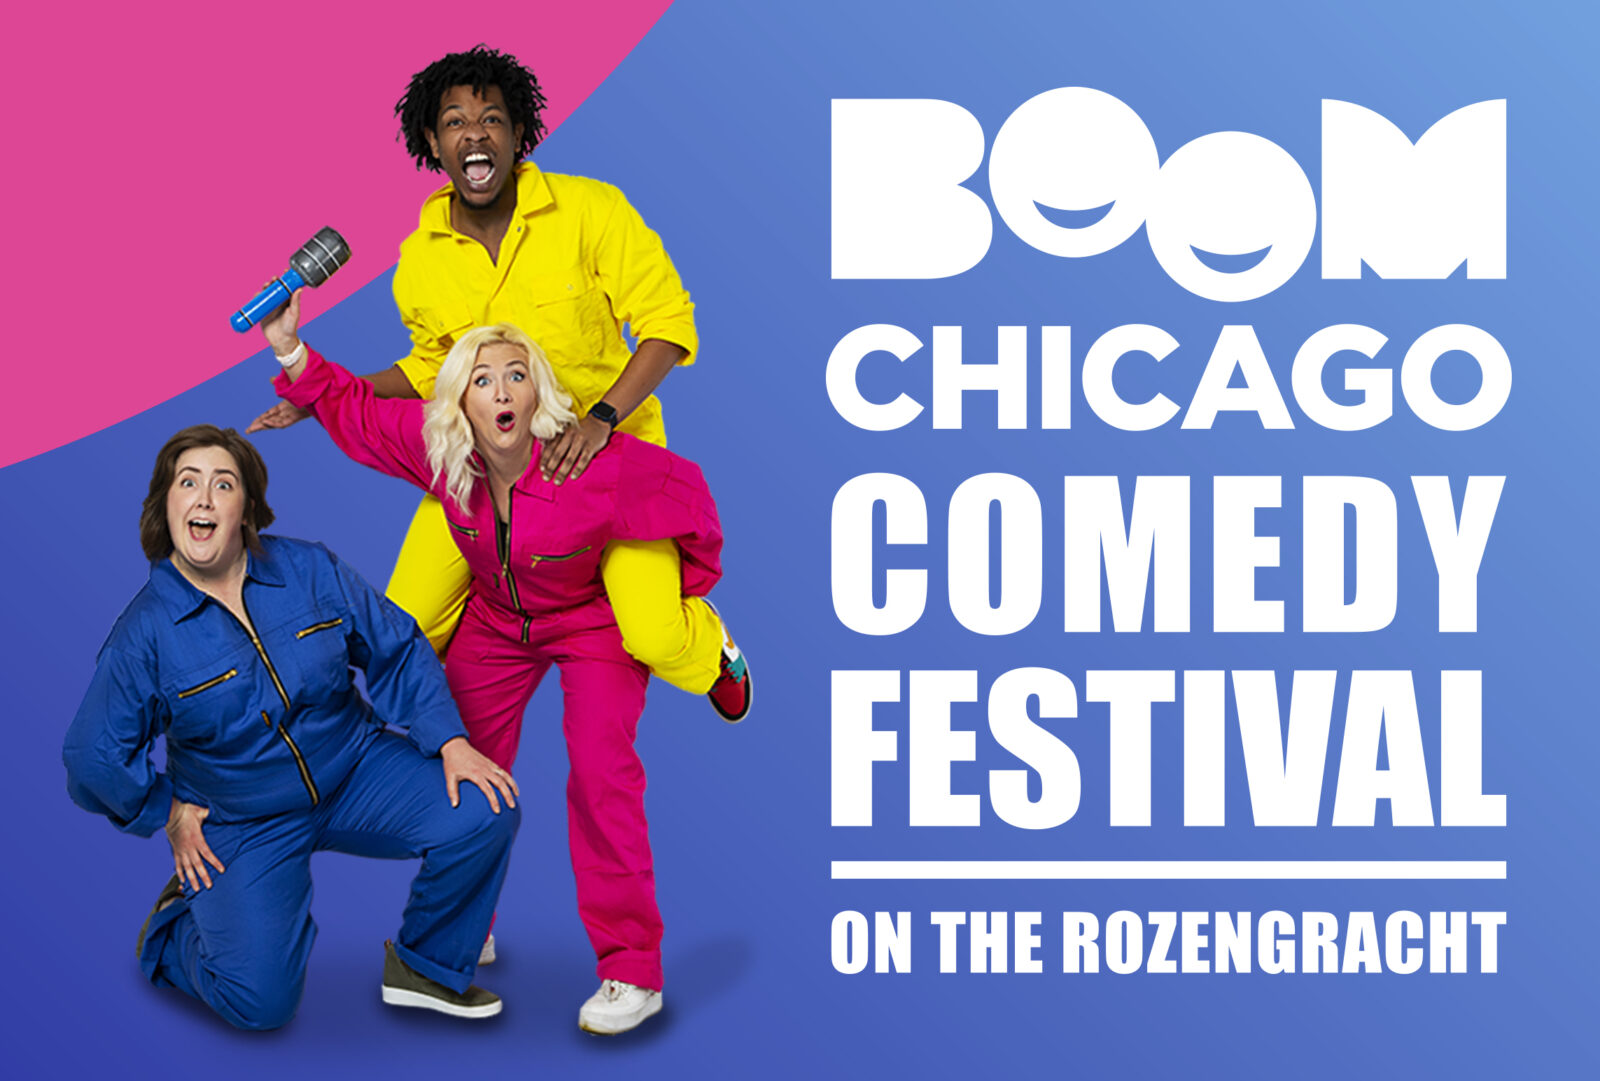 Boom Chicago Comedy Festival maakt volledige lineup bekend